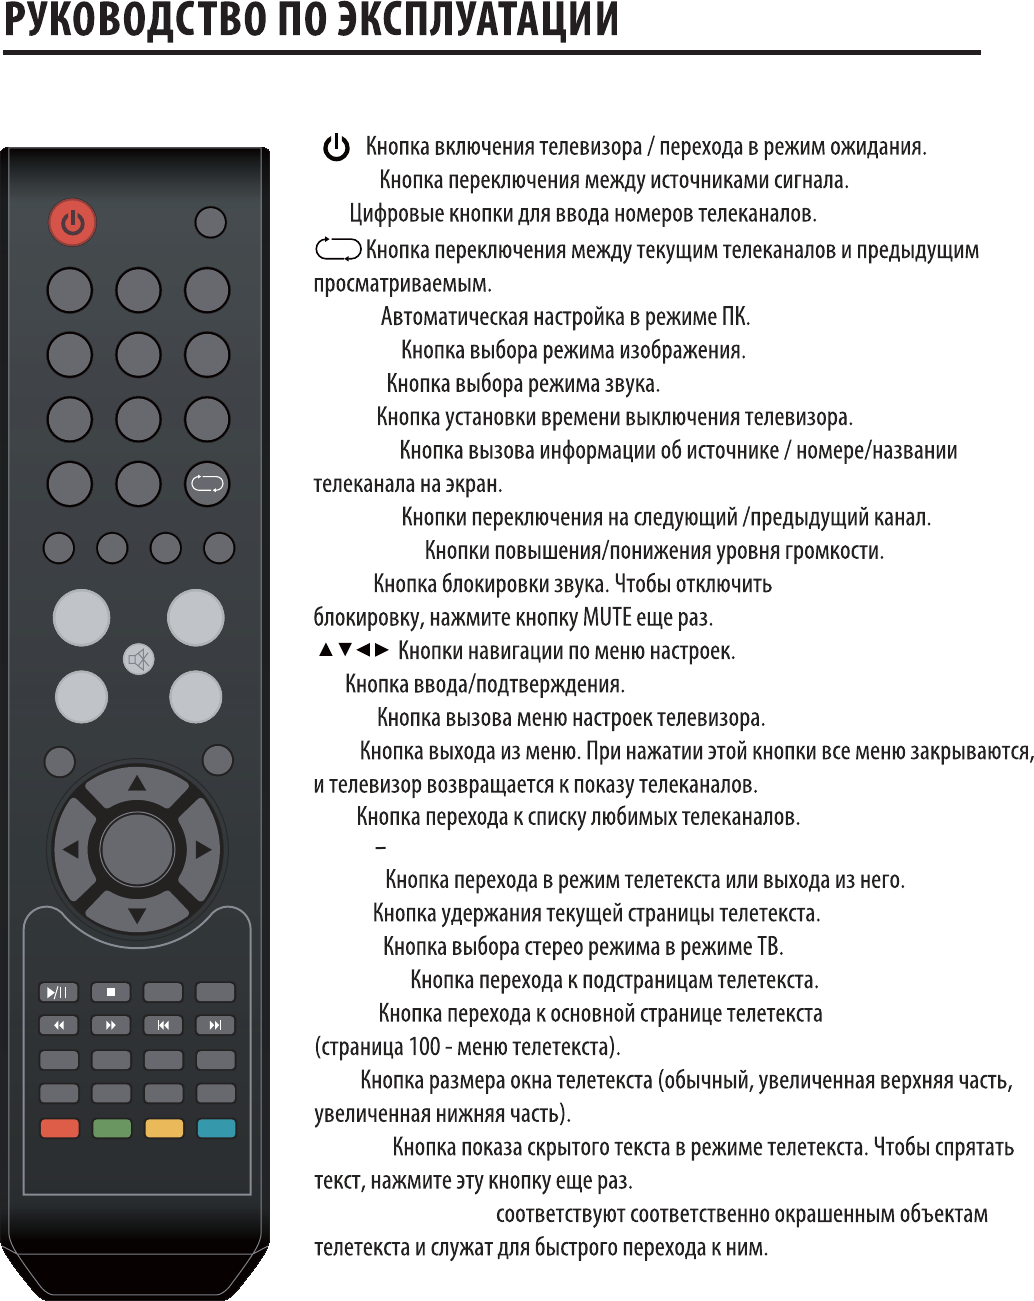 Что означают кнопки на пульте телевизора